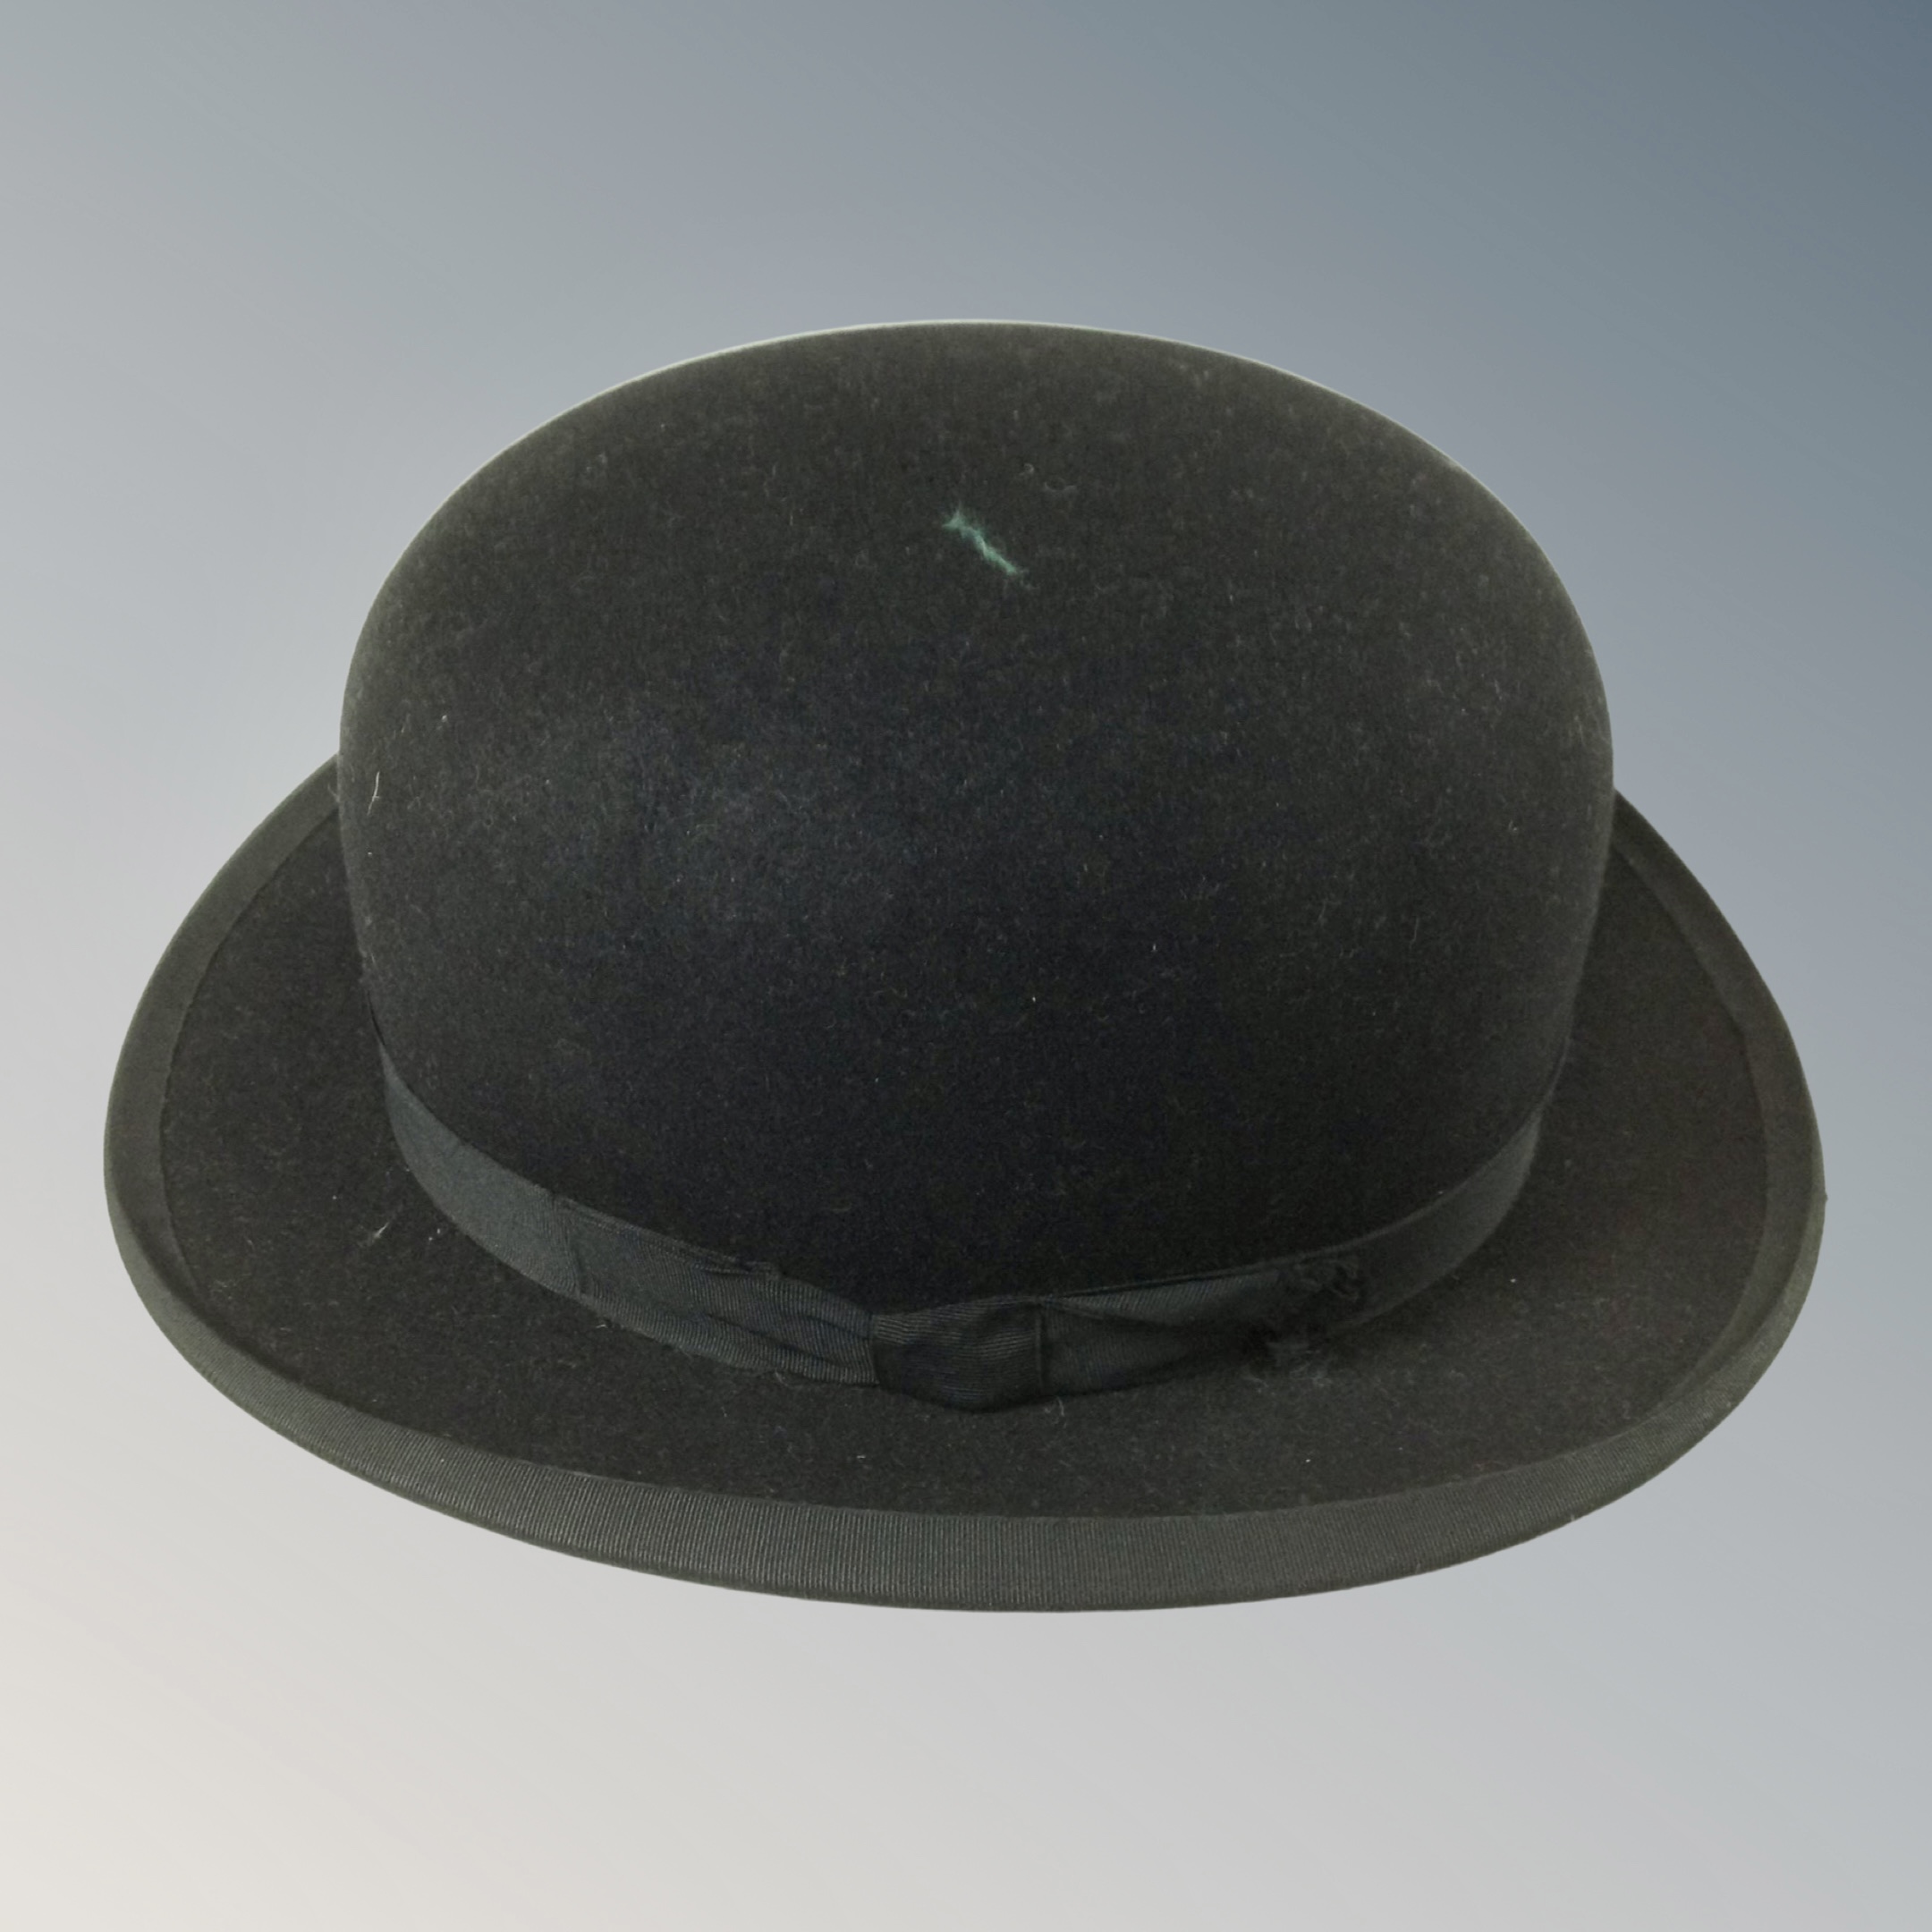 A bowler hat.